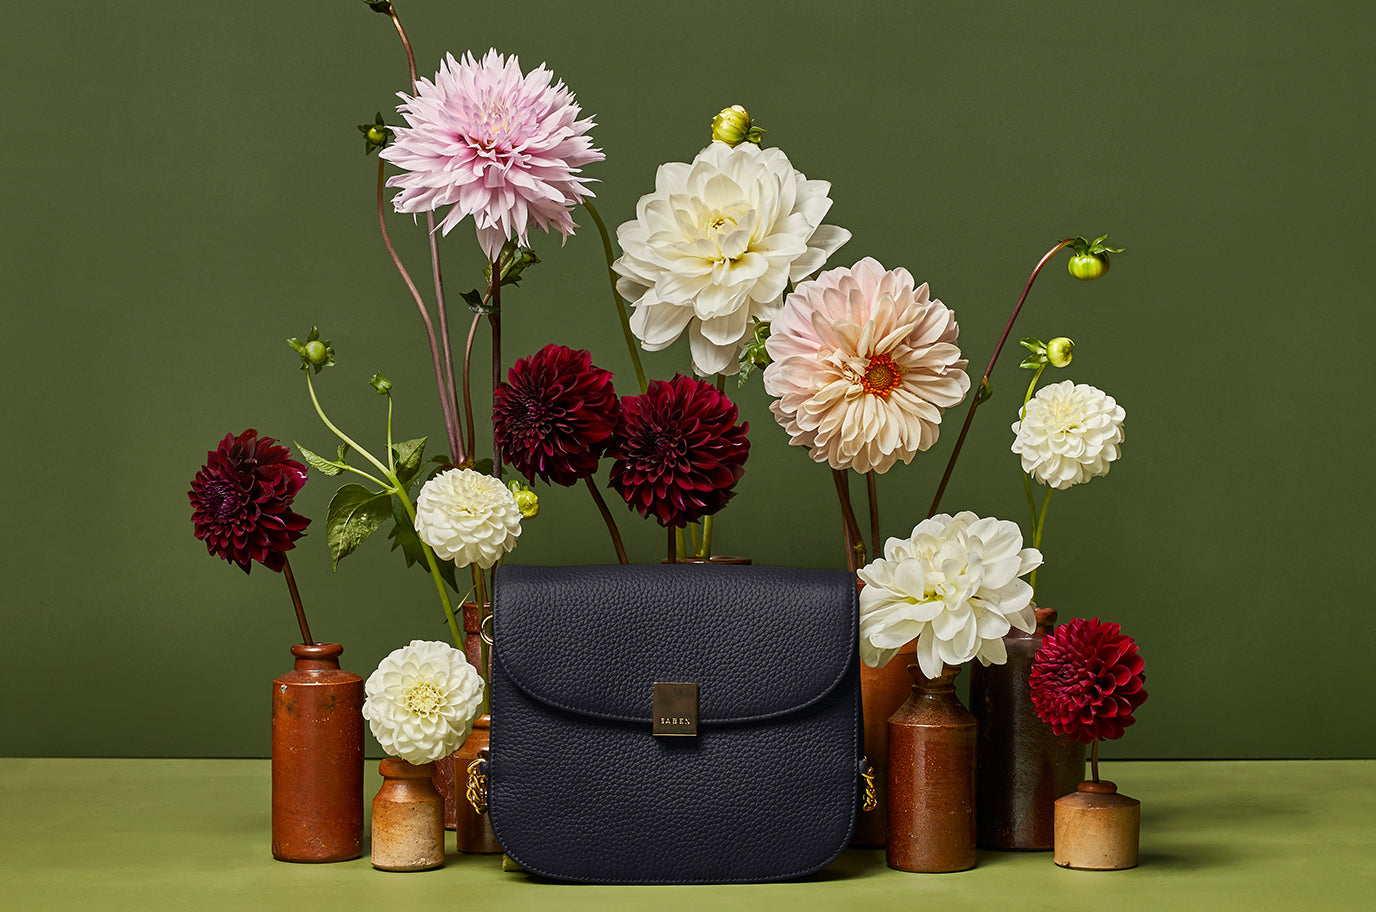 Saben black blaise handbag sitting amongst wild flower garden from the new collection